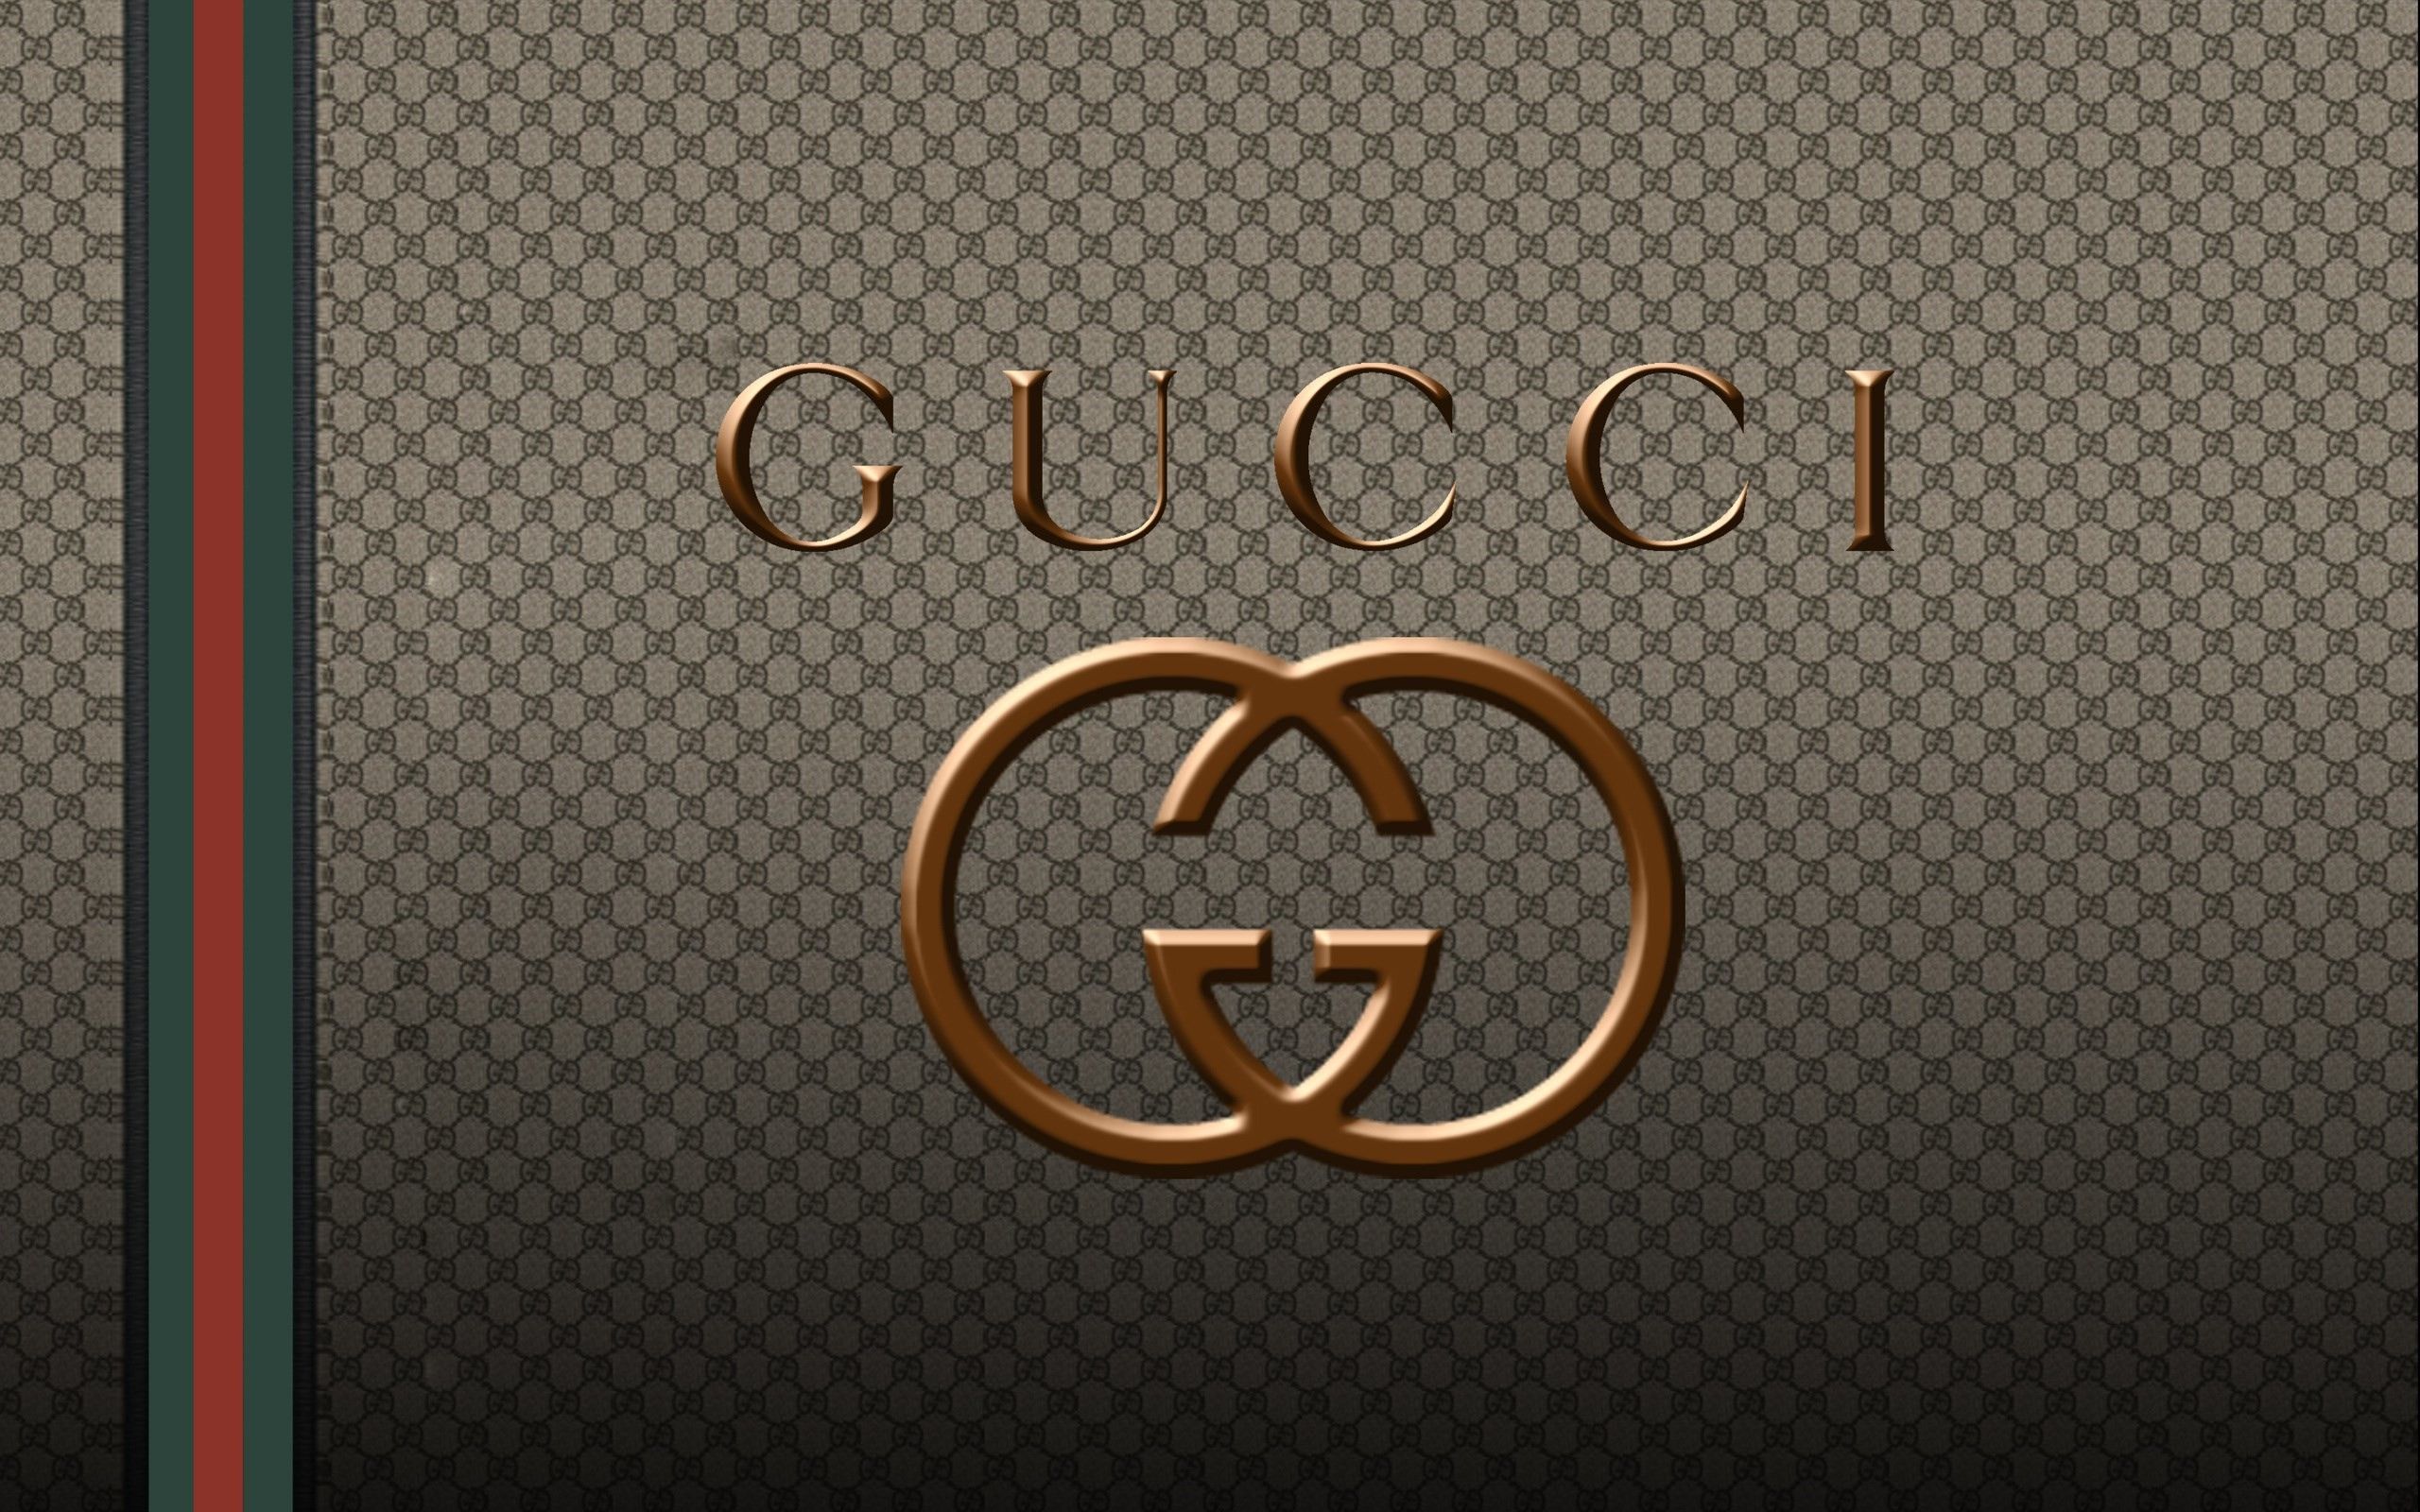 48+] Gucci iPhone Wallpaper Supreme on WallpaperSafari  Gucci pattern,  Supreme iphone wallpaper, Pattern wallpaper